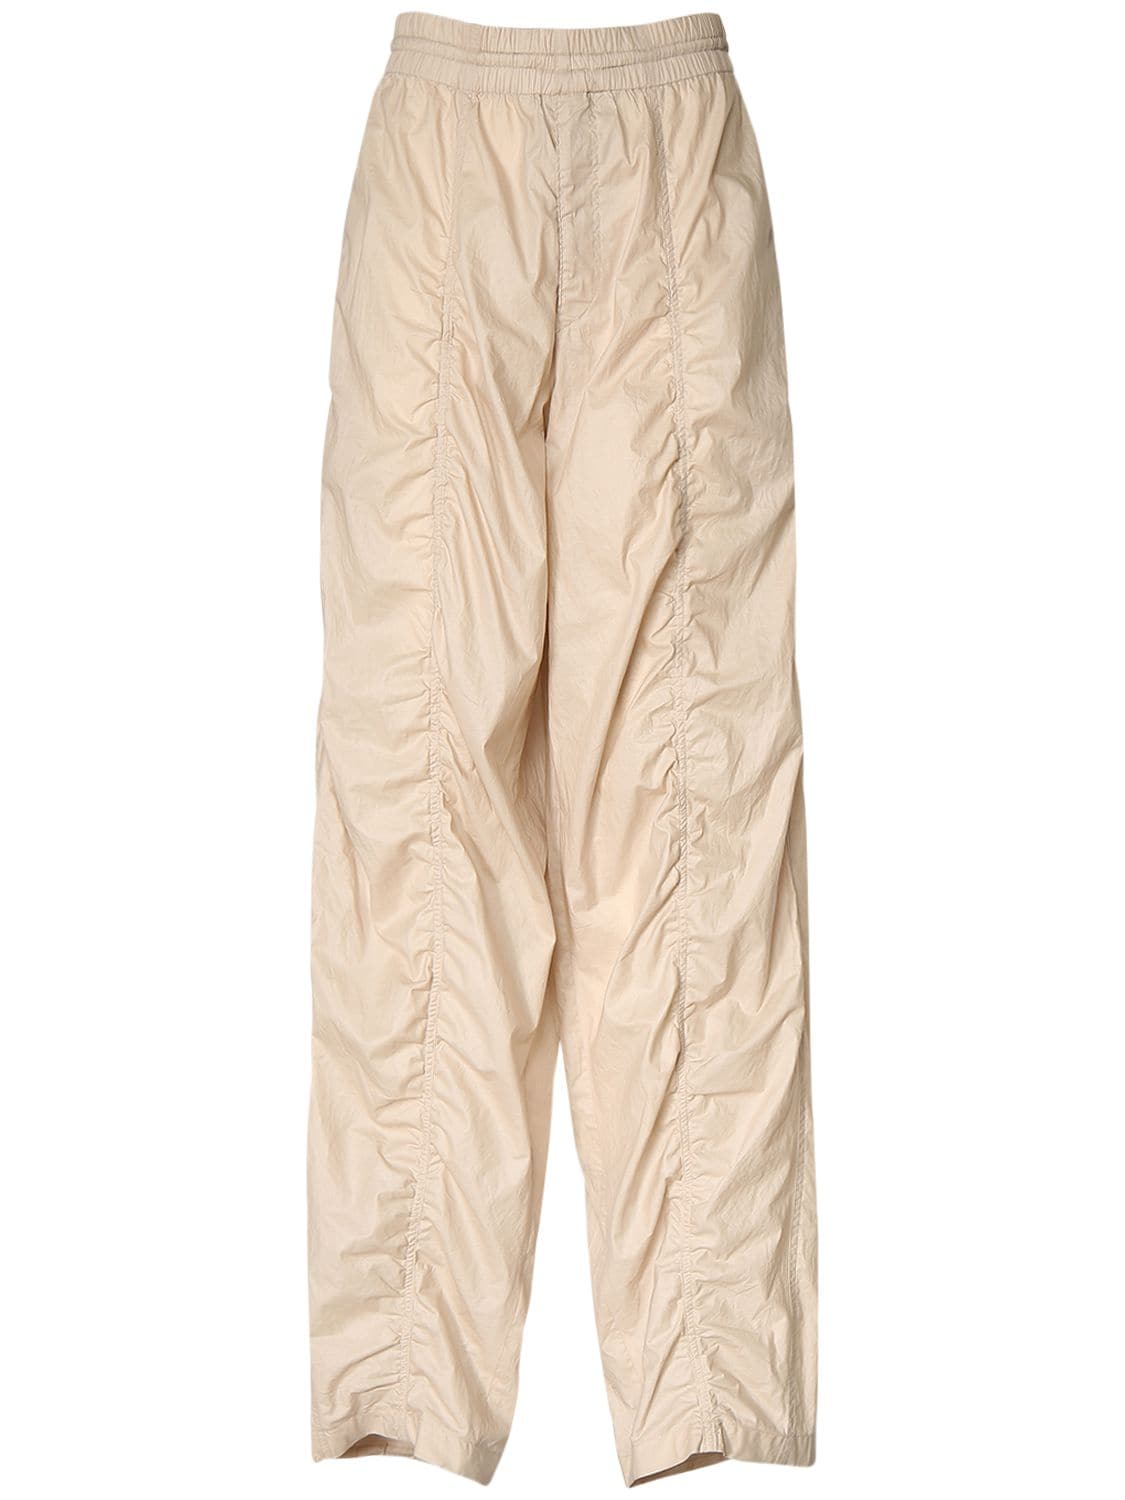 ISABEL MARANT Kimbra Cotton Gathered Pants